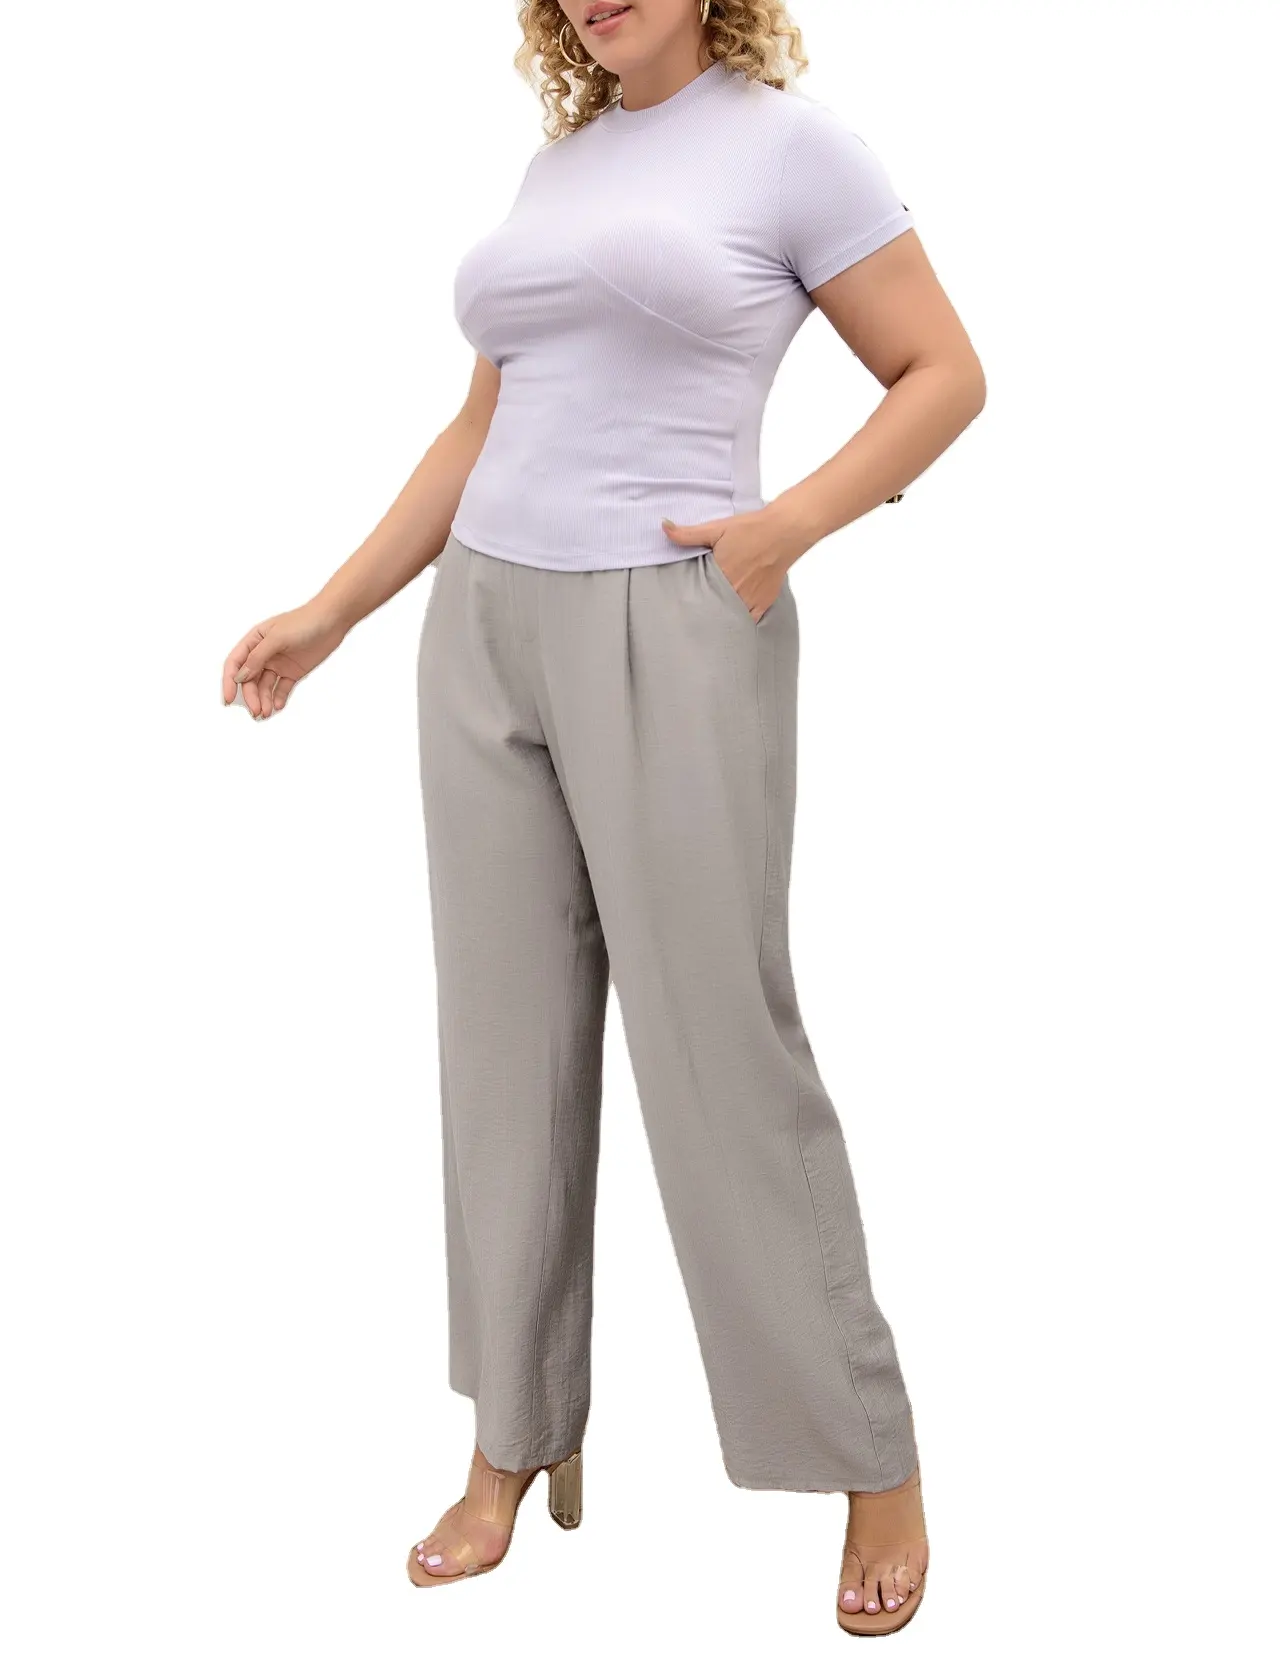 Spring/Summer Plus Size Grey Colors Women's Pants High Waist Ladies Casual Wide Leg Fashion Professional Suit Pants Trousers